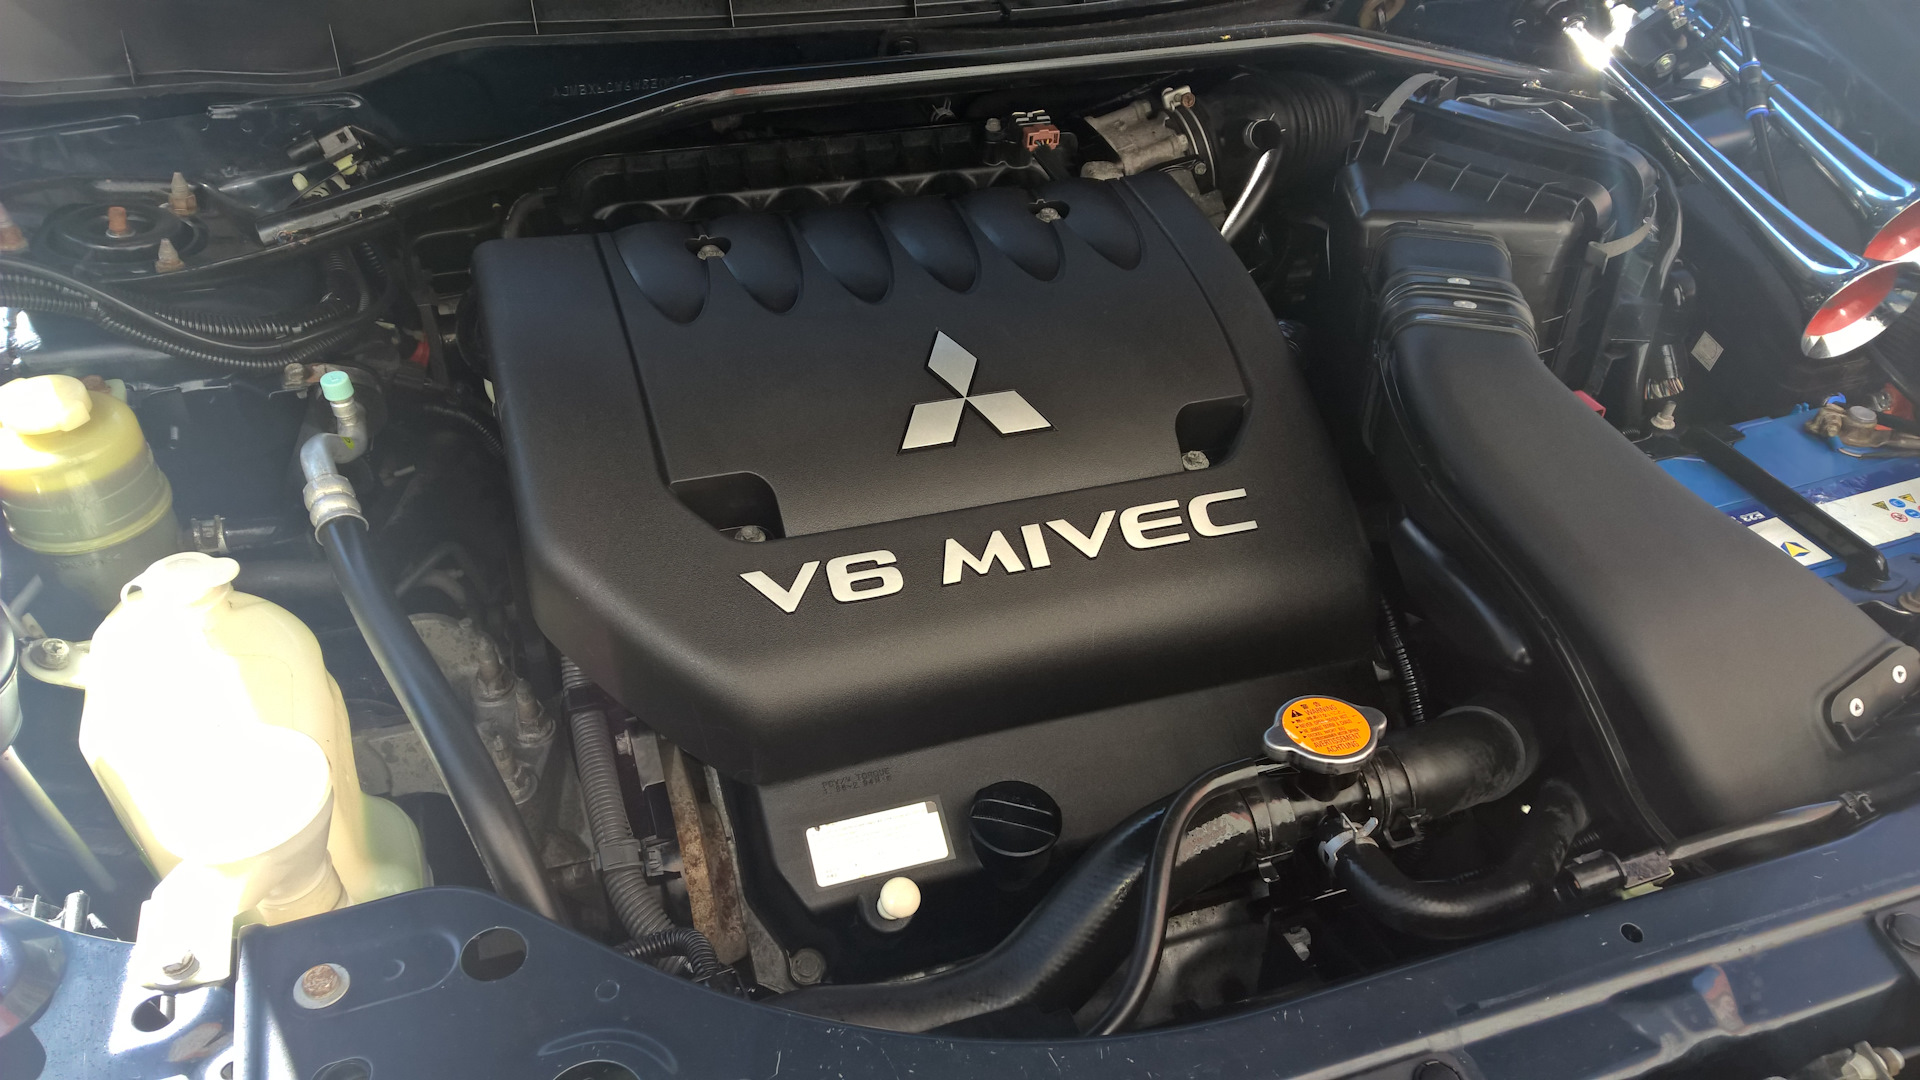 Двигатель мицубиси аутлендер хл. Mitsubishi Outlander XL 3.0 двигатель. V6 мотор ХЛ Аутлендер 3.0. Mitsubishi Outlander 2 v6 мотор. Outlander XL v6 3.0 двигатель.